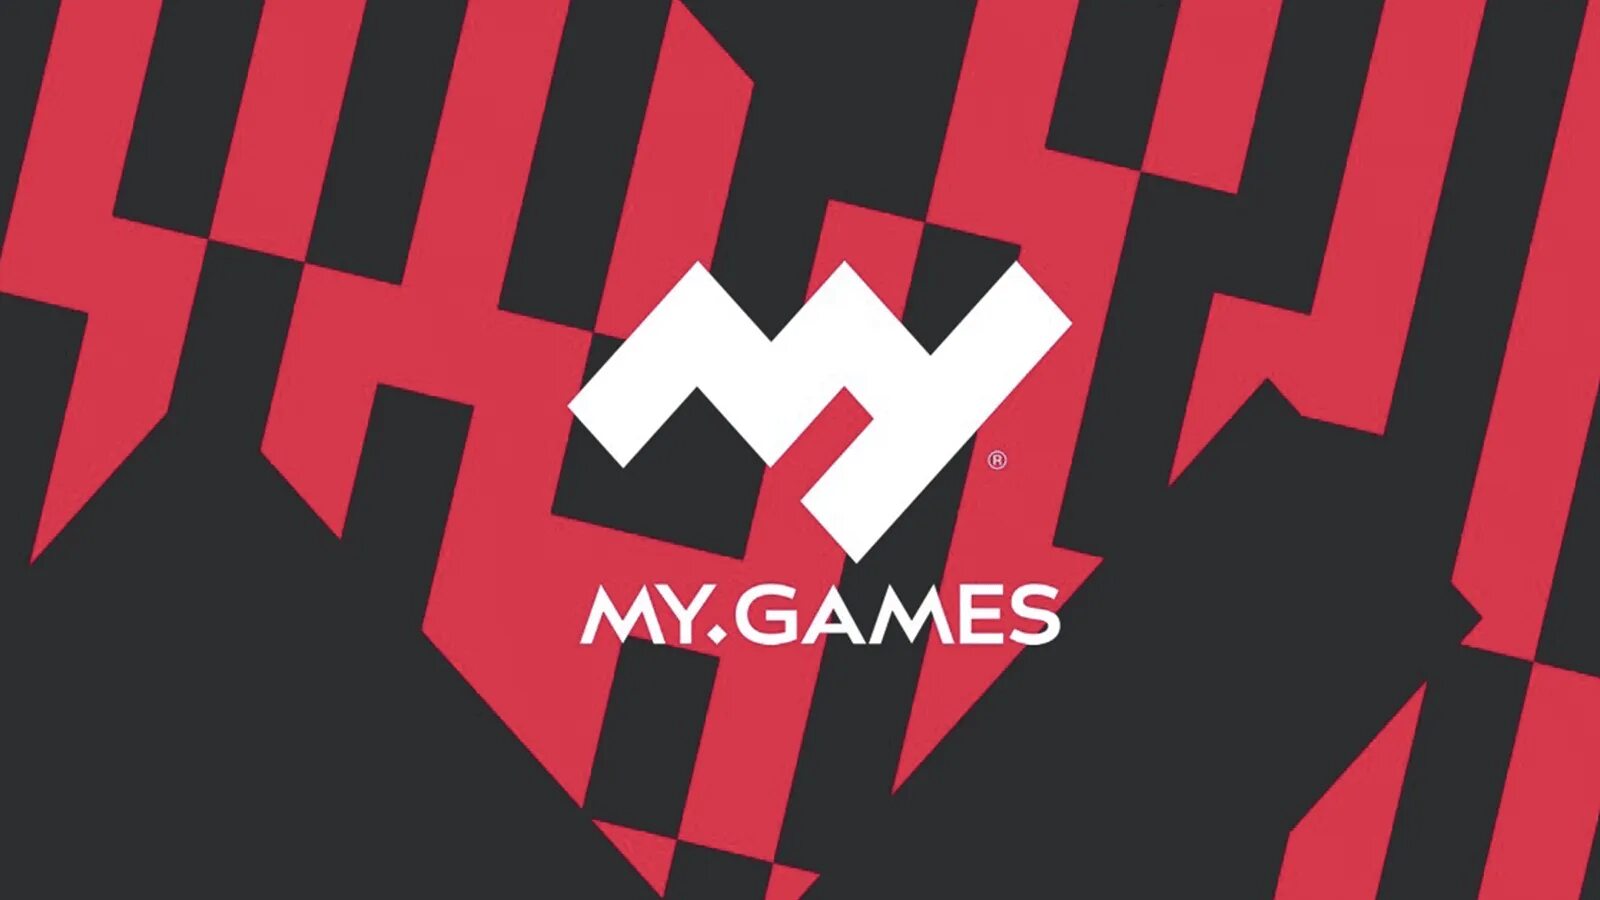 My game сайт. My games. My games logo. My games игровой центр логотип. Бренд game.